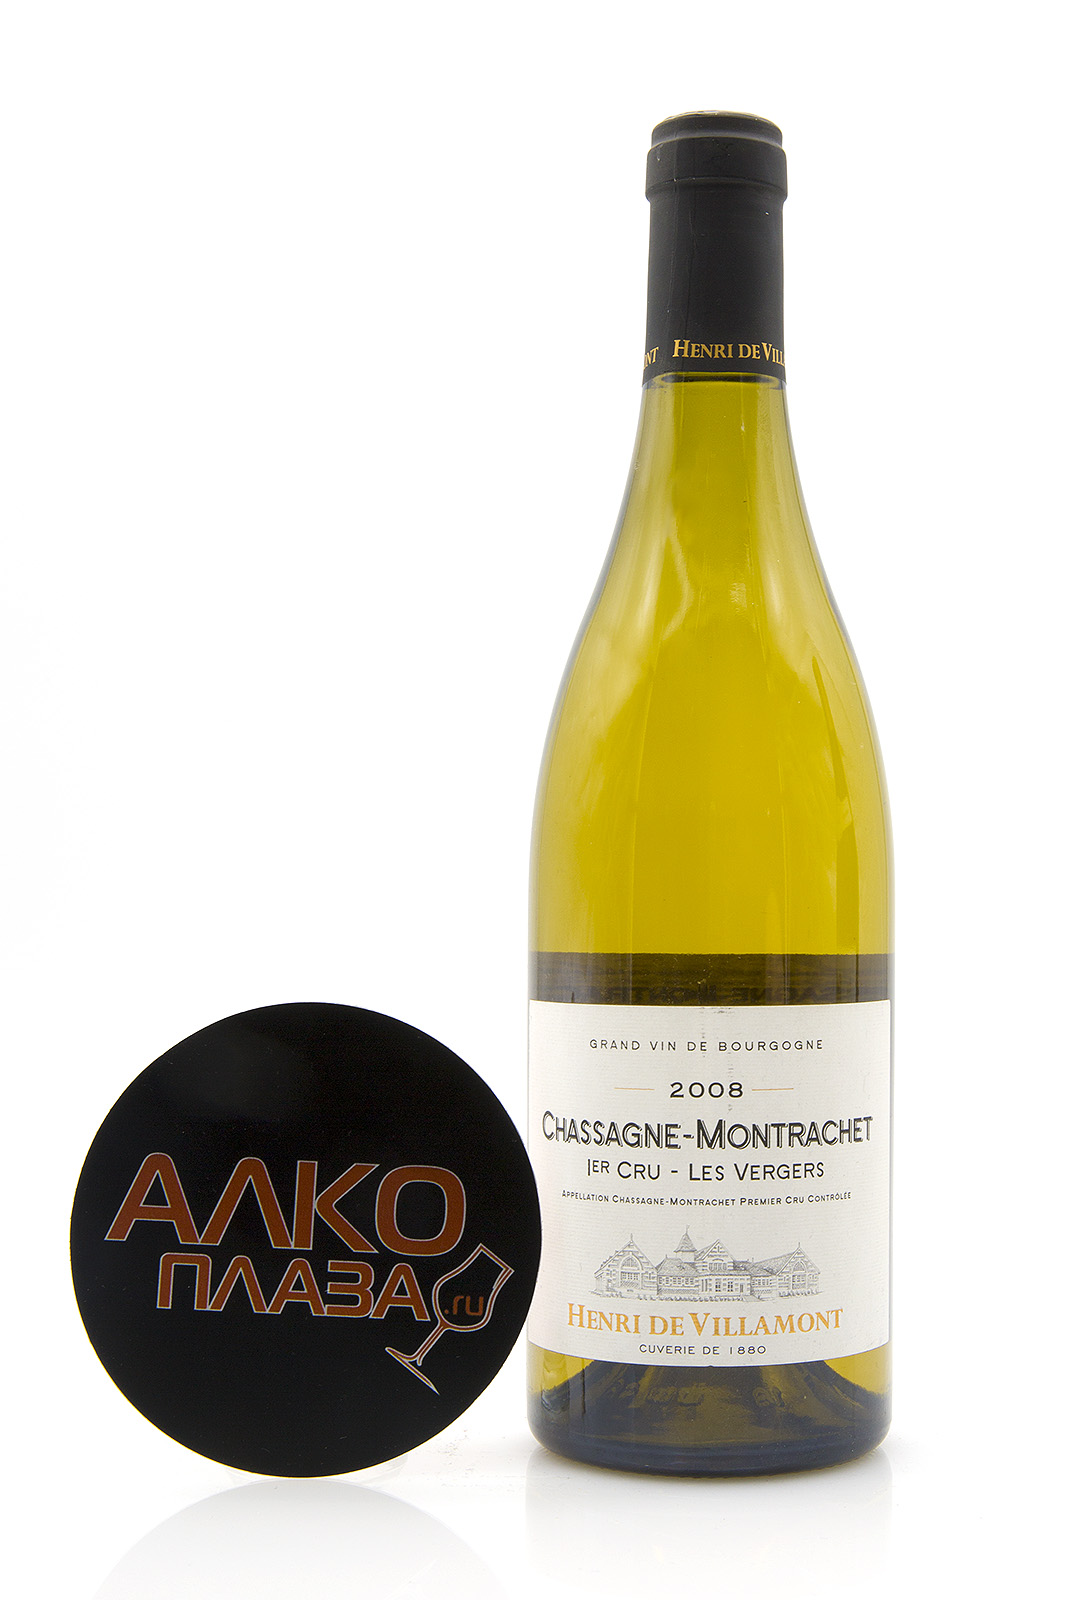 Henri de Villamont Chassagne-Montrachet AOC французское вино Анри де Вилльямон Шассань Монраше АОС